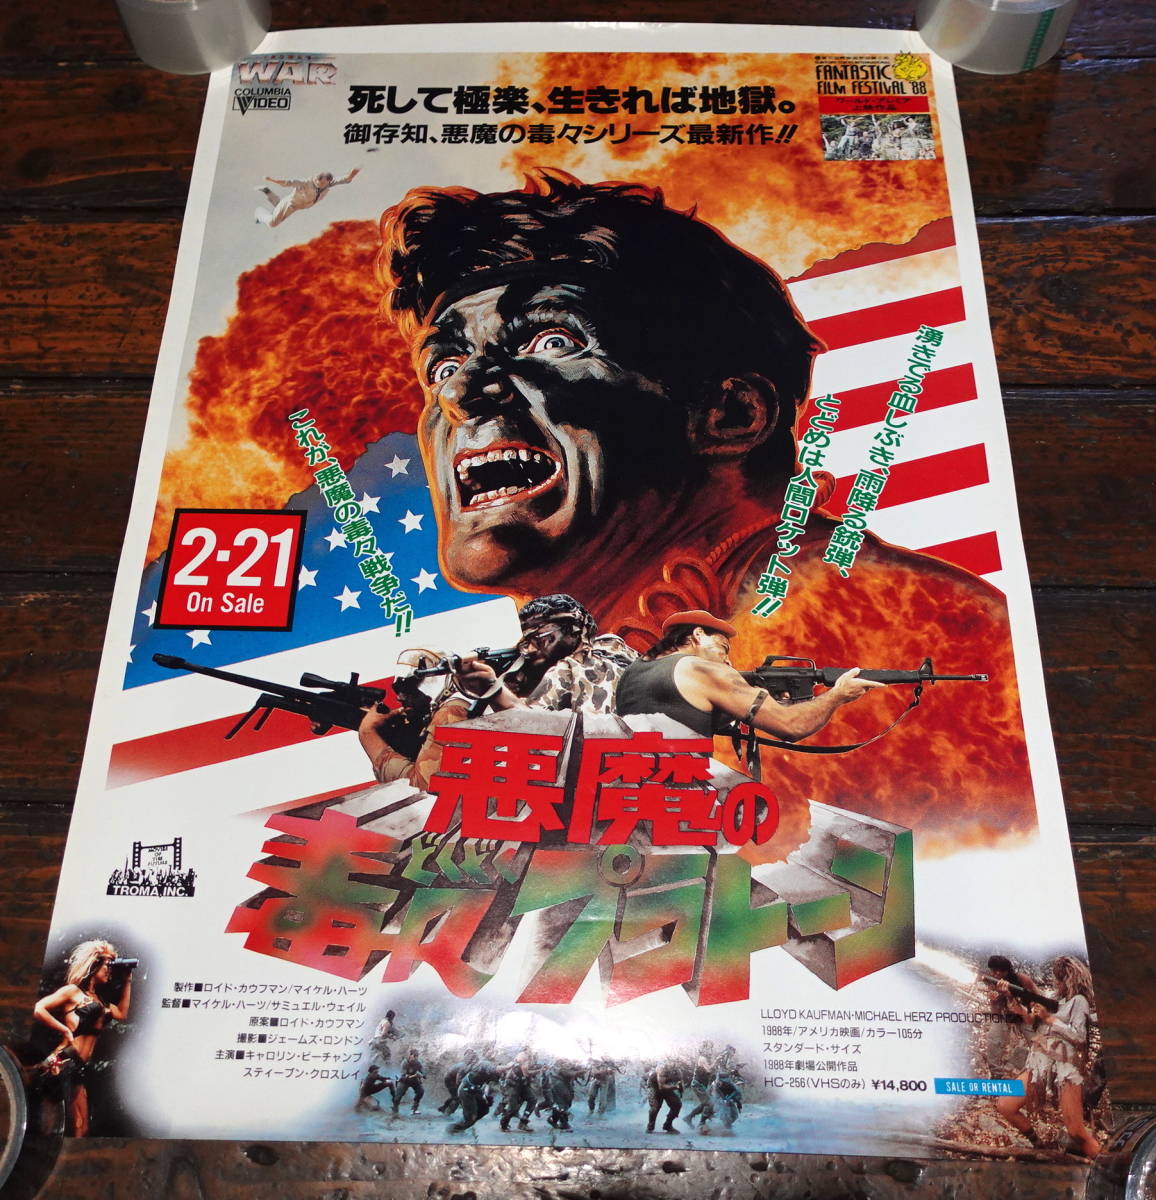  movie poster [ demon. .. pra tone ]VHS sale notification version /Troma*s War/ theater not yet public work / Toro ma/ Lloyd *kauf man 